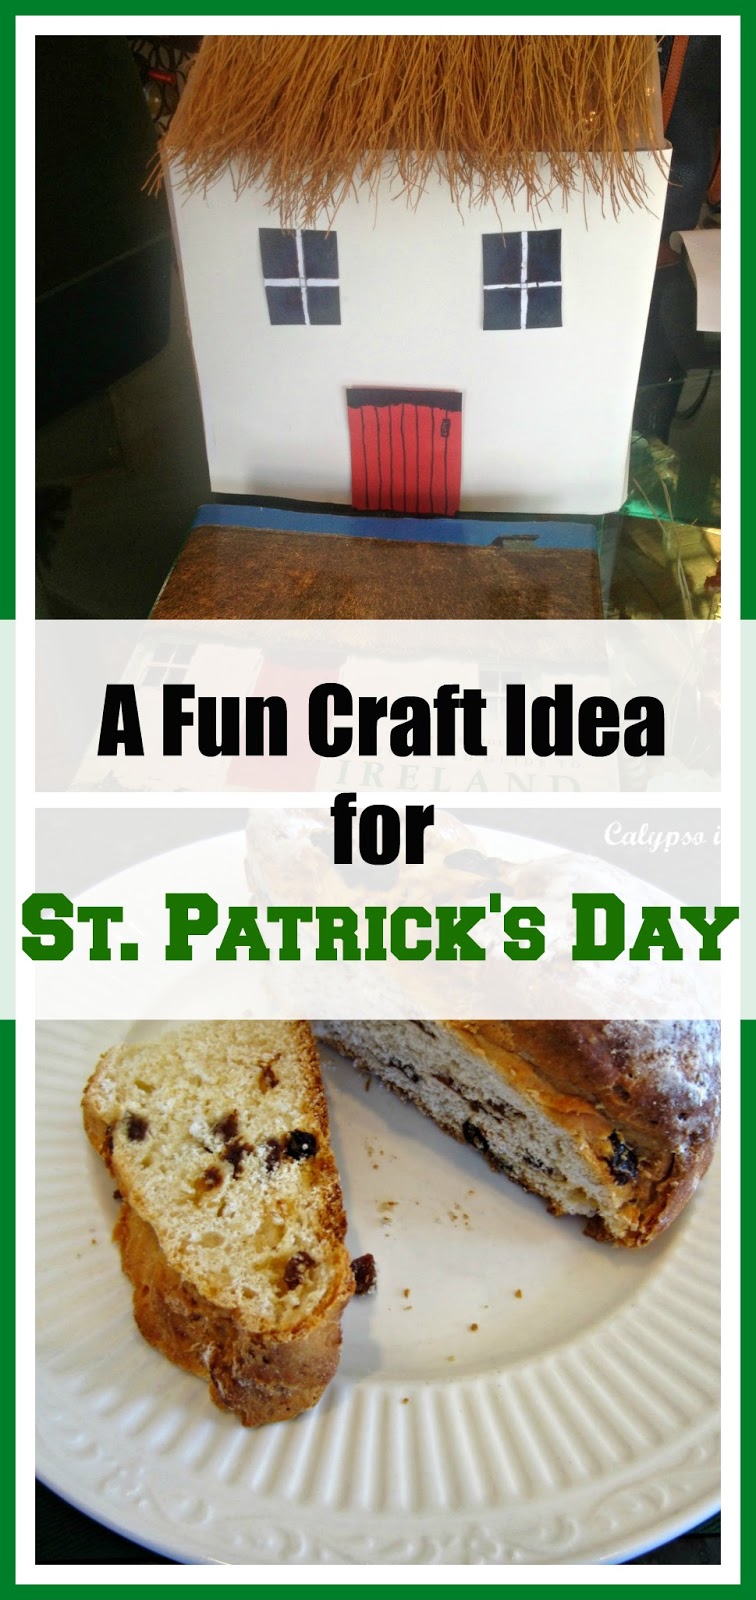 Fun Craft Idea for St. Patrick's Day